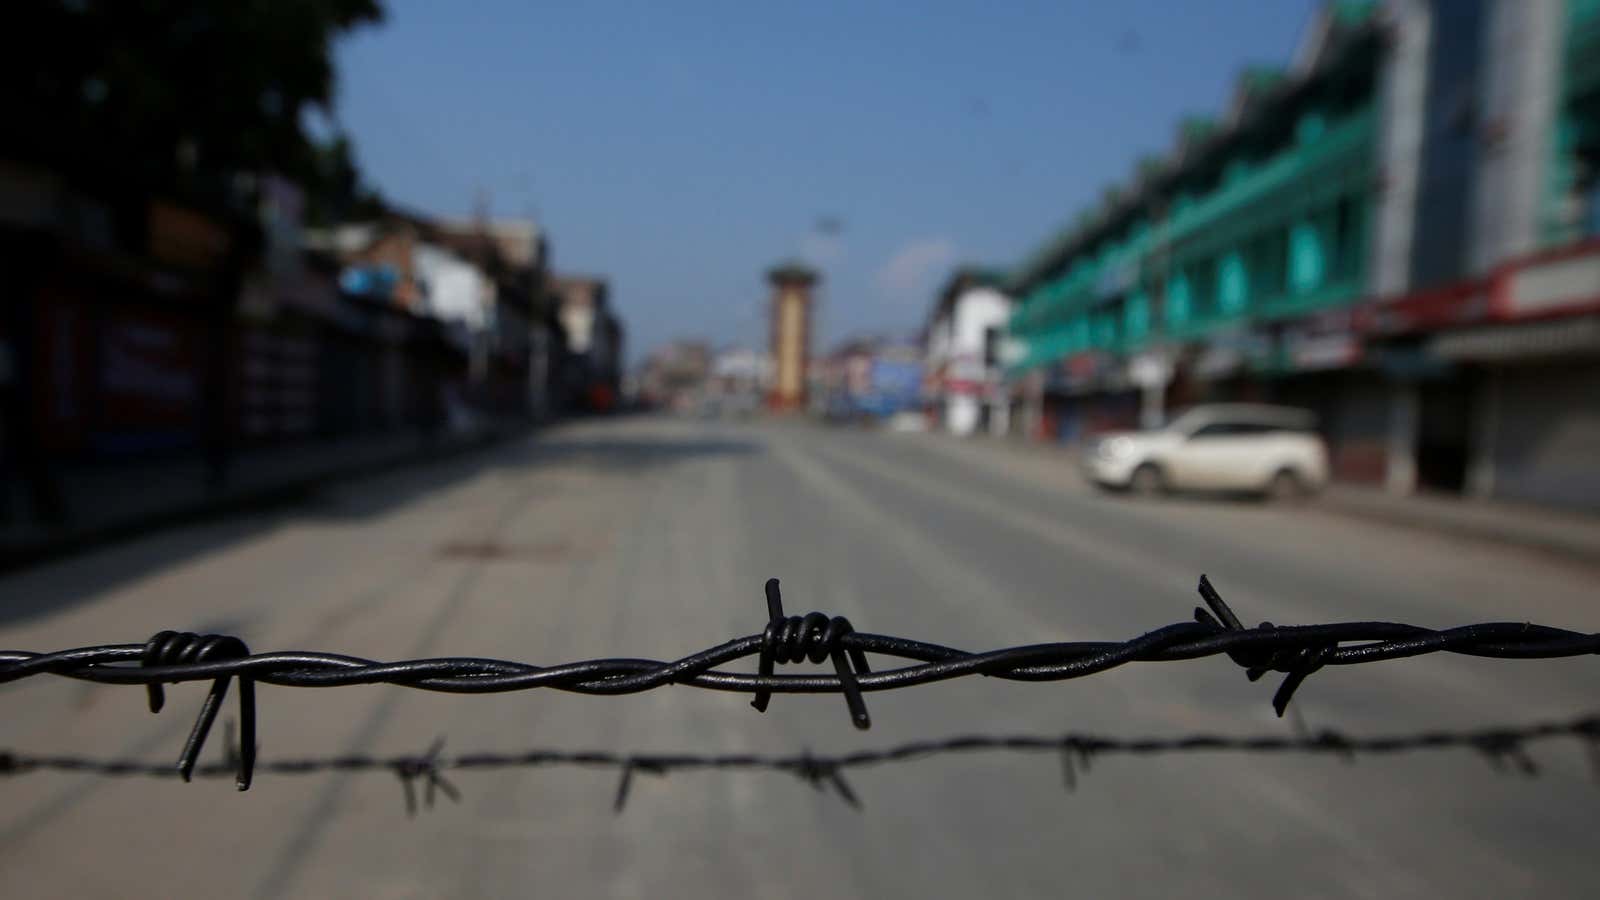 The Lancet says that life under lockdown will harm Kashmiri people.